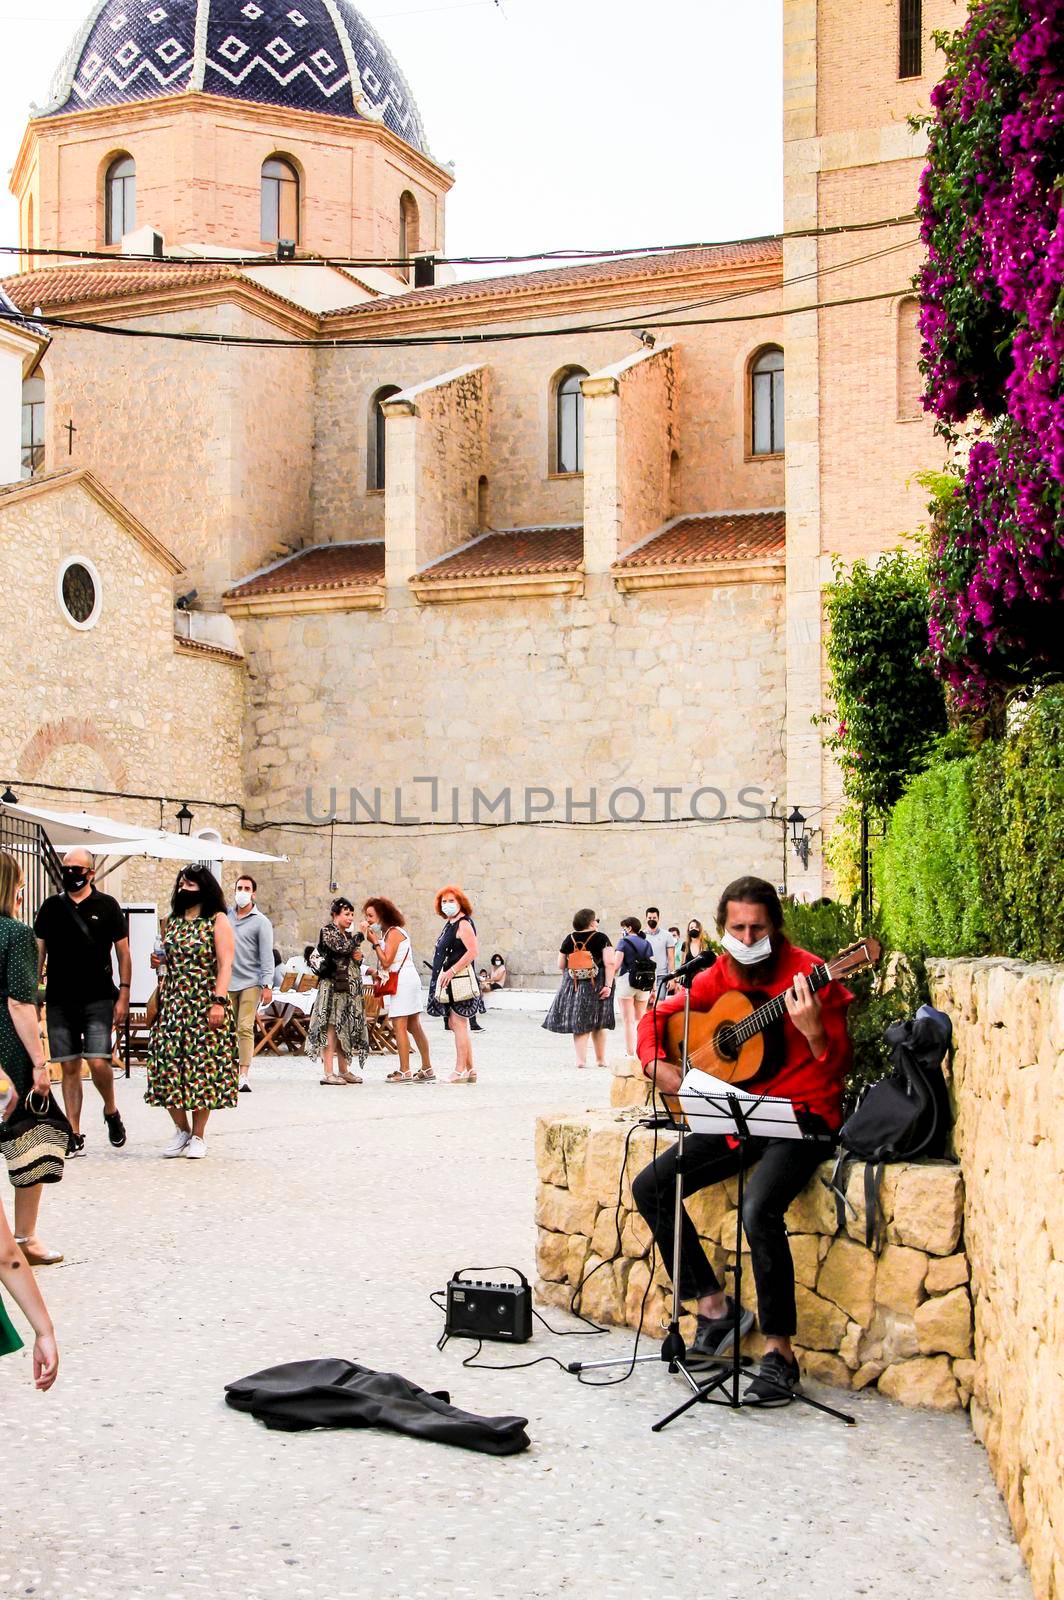 Altea, Alicante, Spain- June 12, 2021: Musician playing the guitar and begging in the main square of Altea village in Alicante, Spain